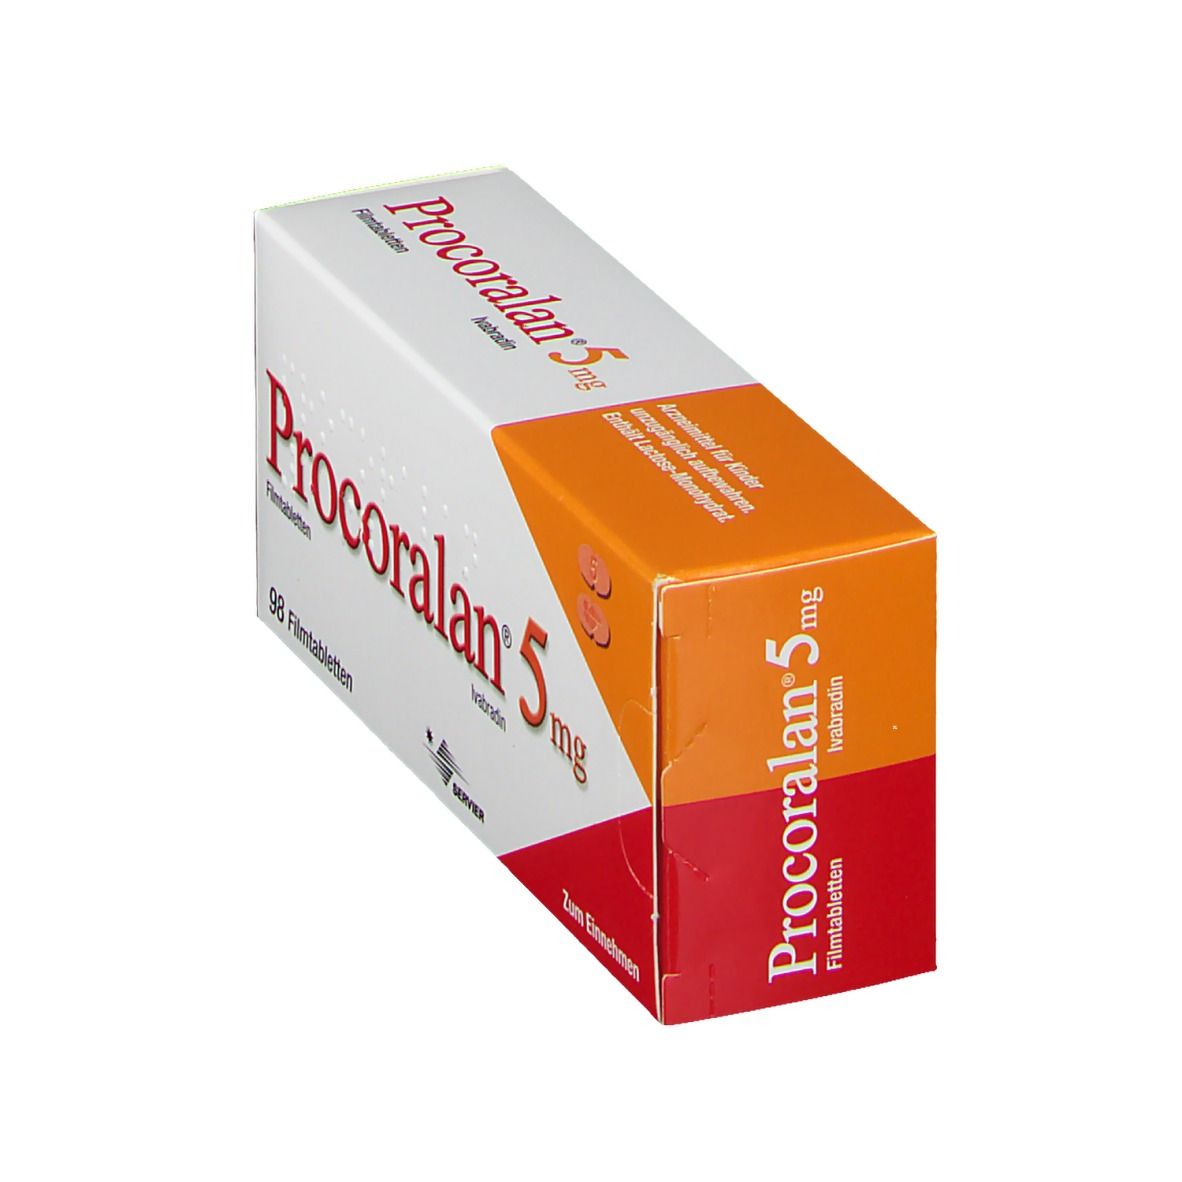 Procoralan® 5 mg